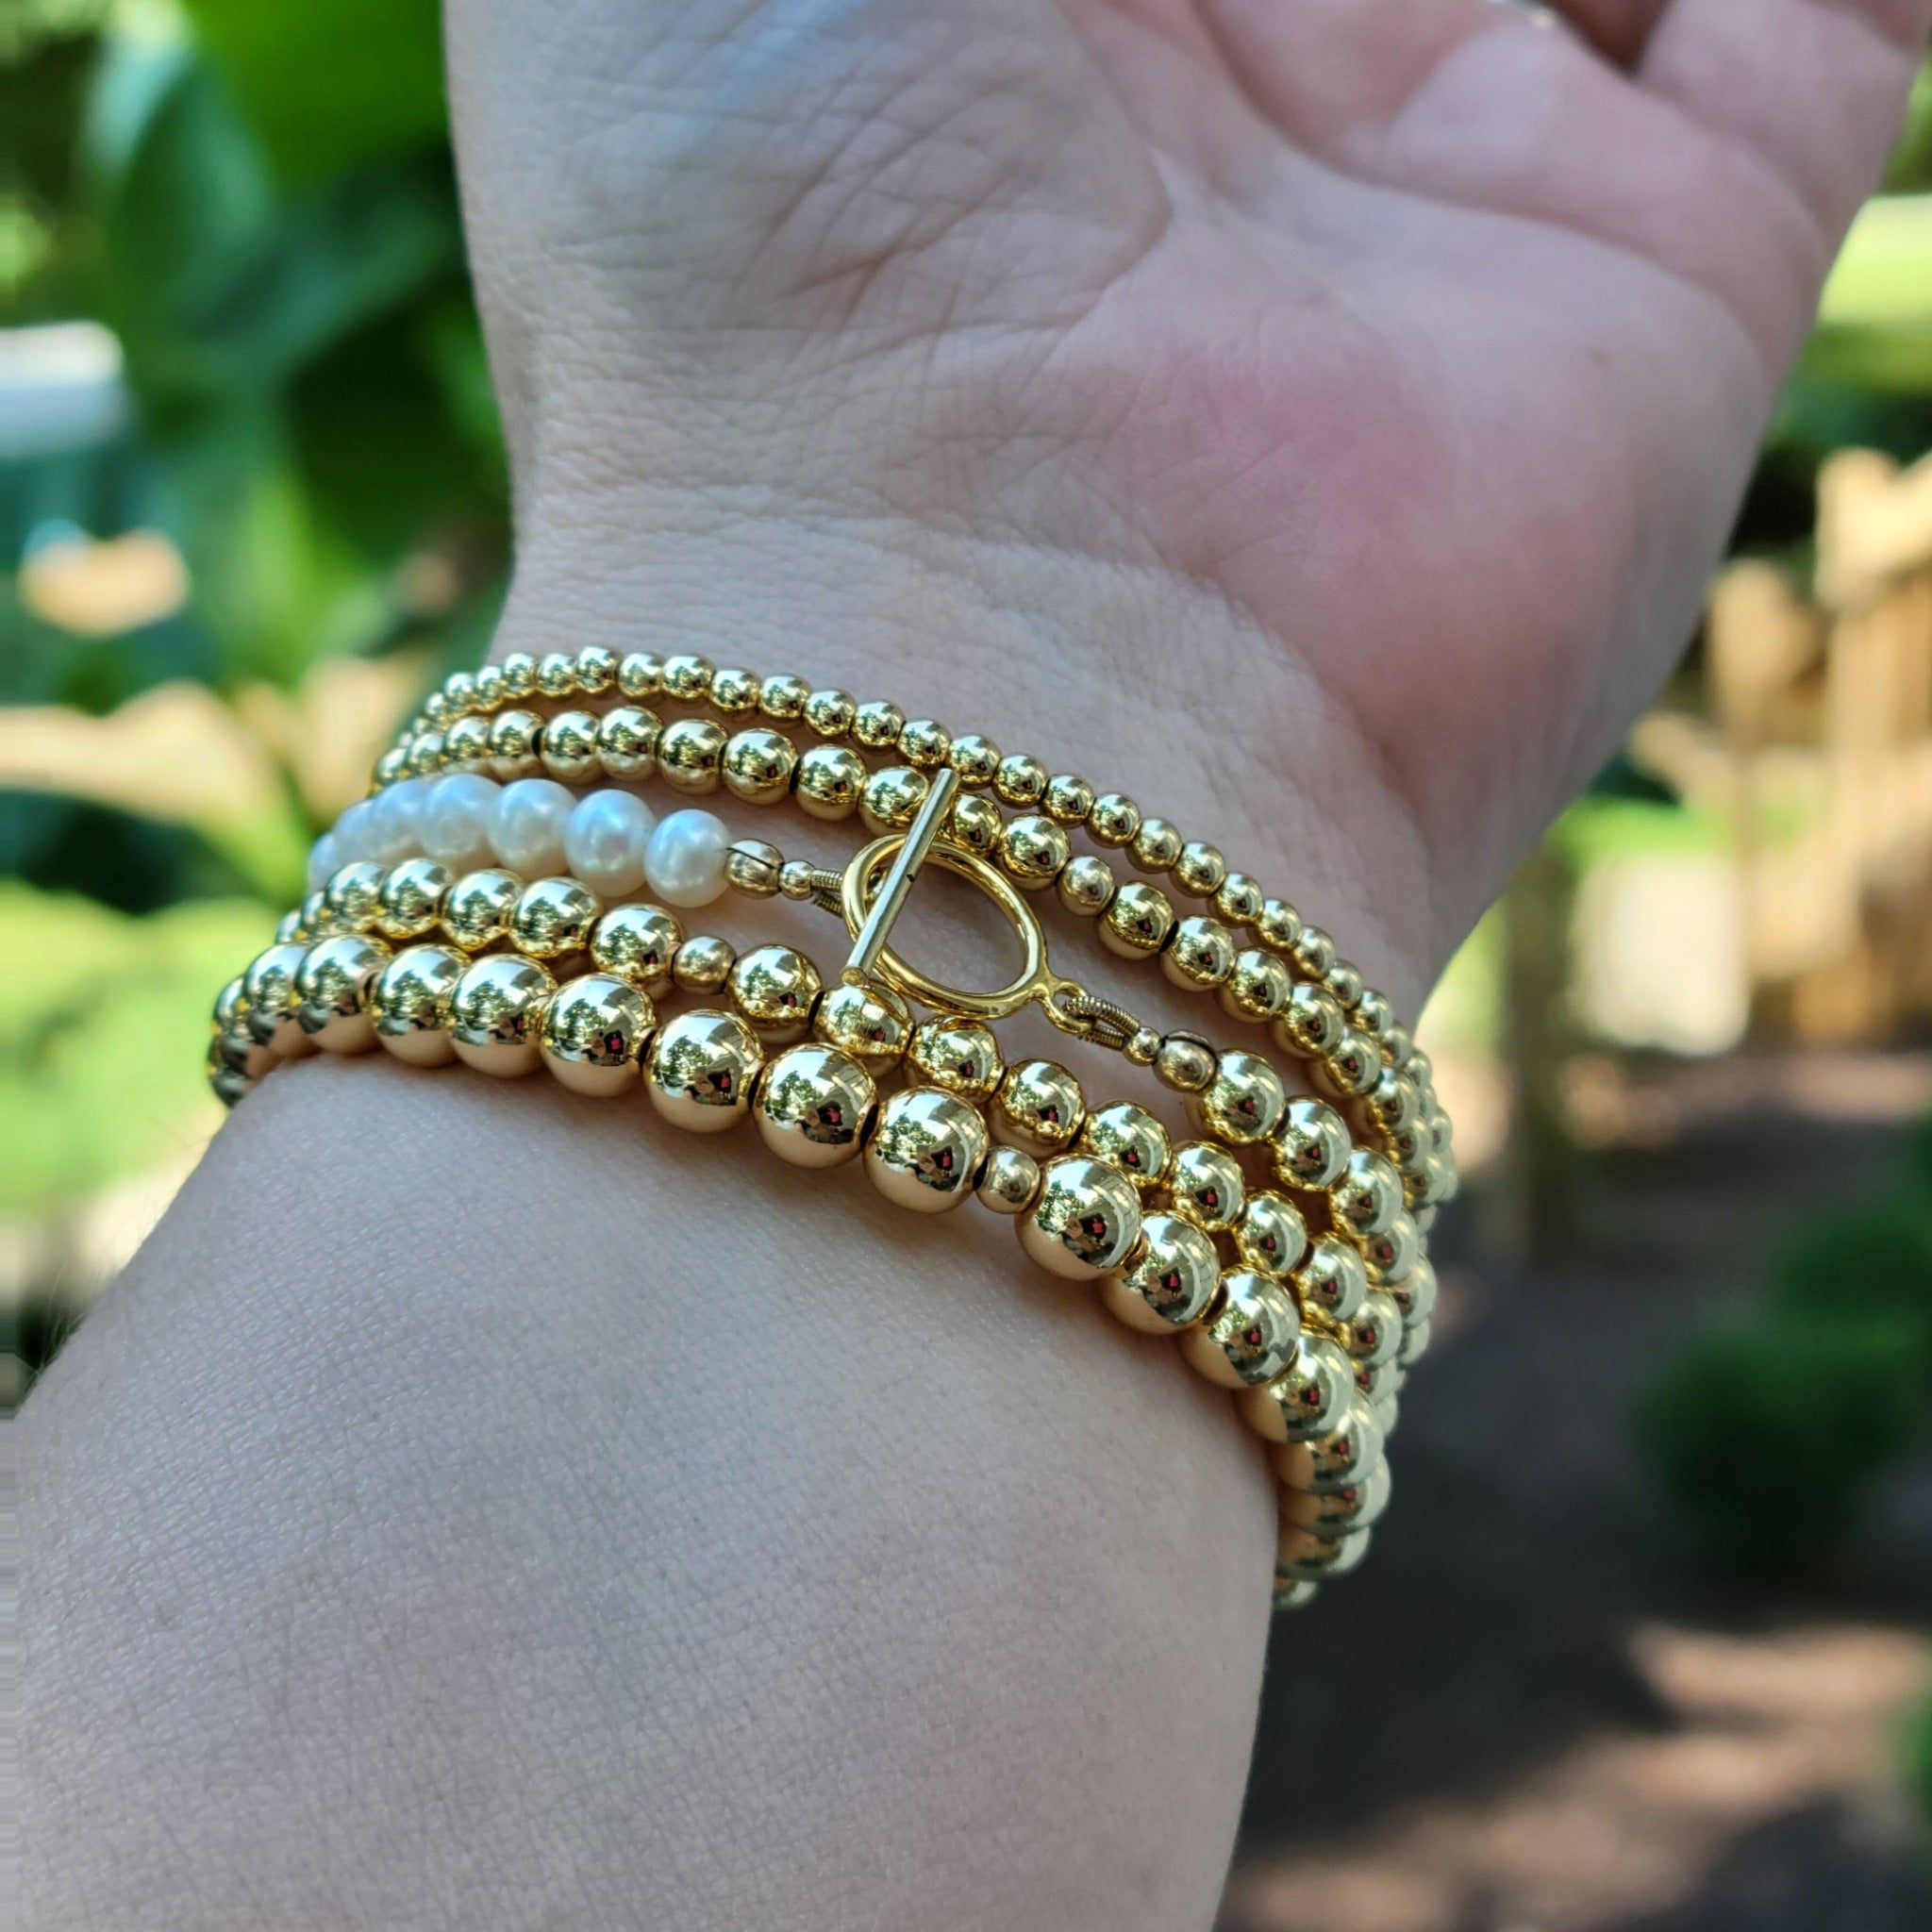 3mm, 4mm, 5mm and 6mm Beads Bracelet in Gold-Filled, Beaded Bracelets 5mm| 1 Bracelet